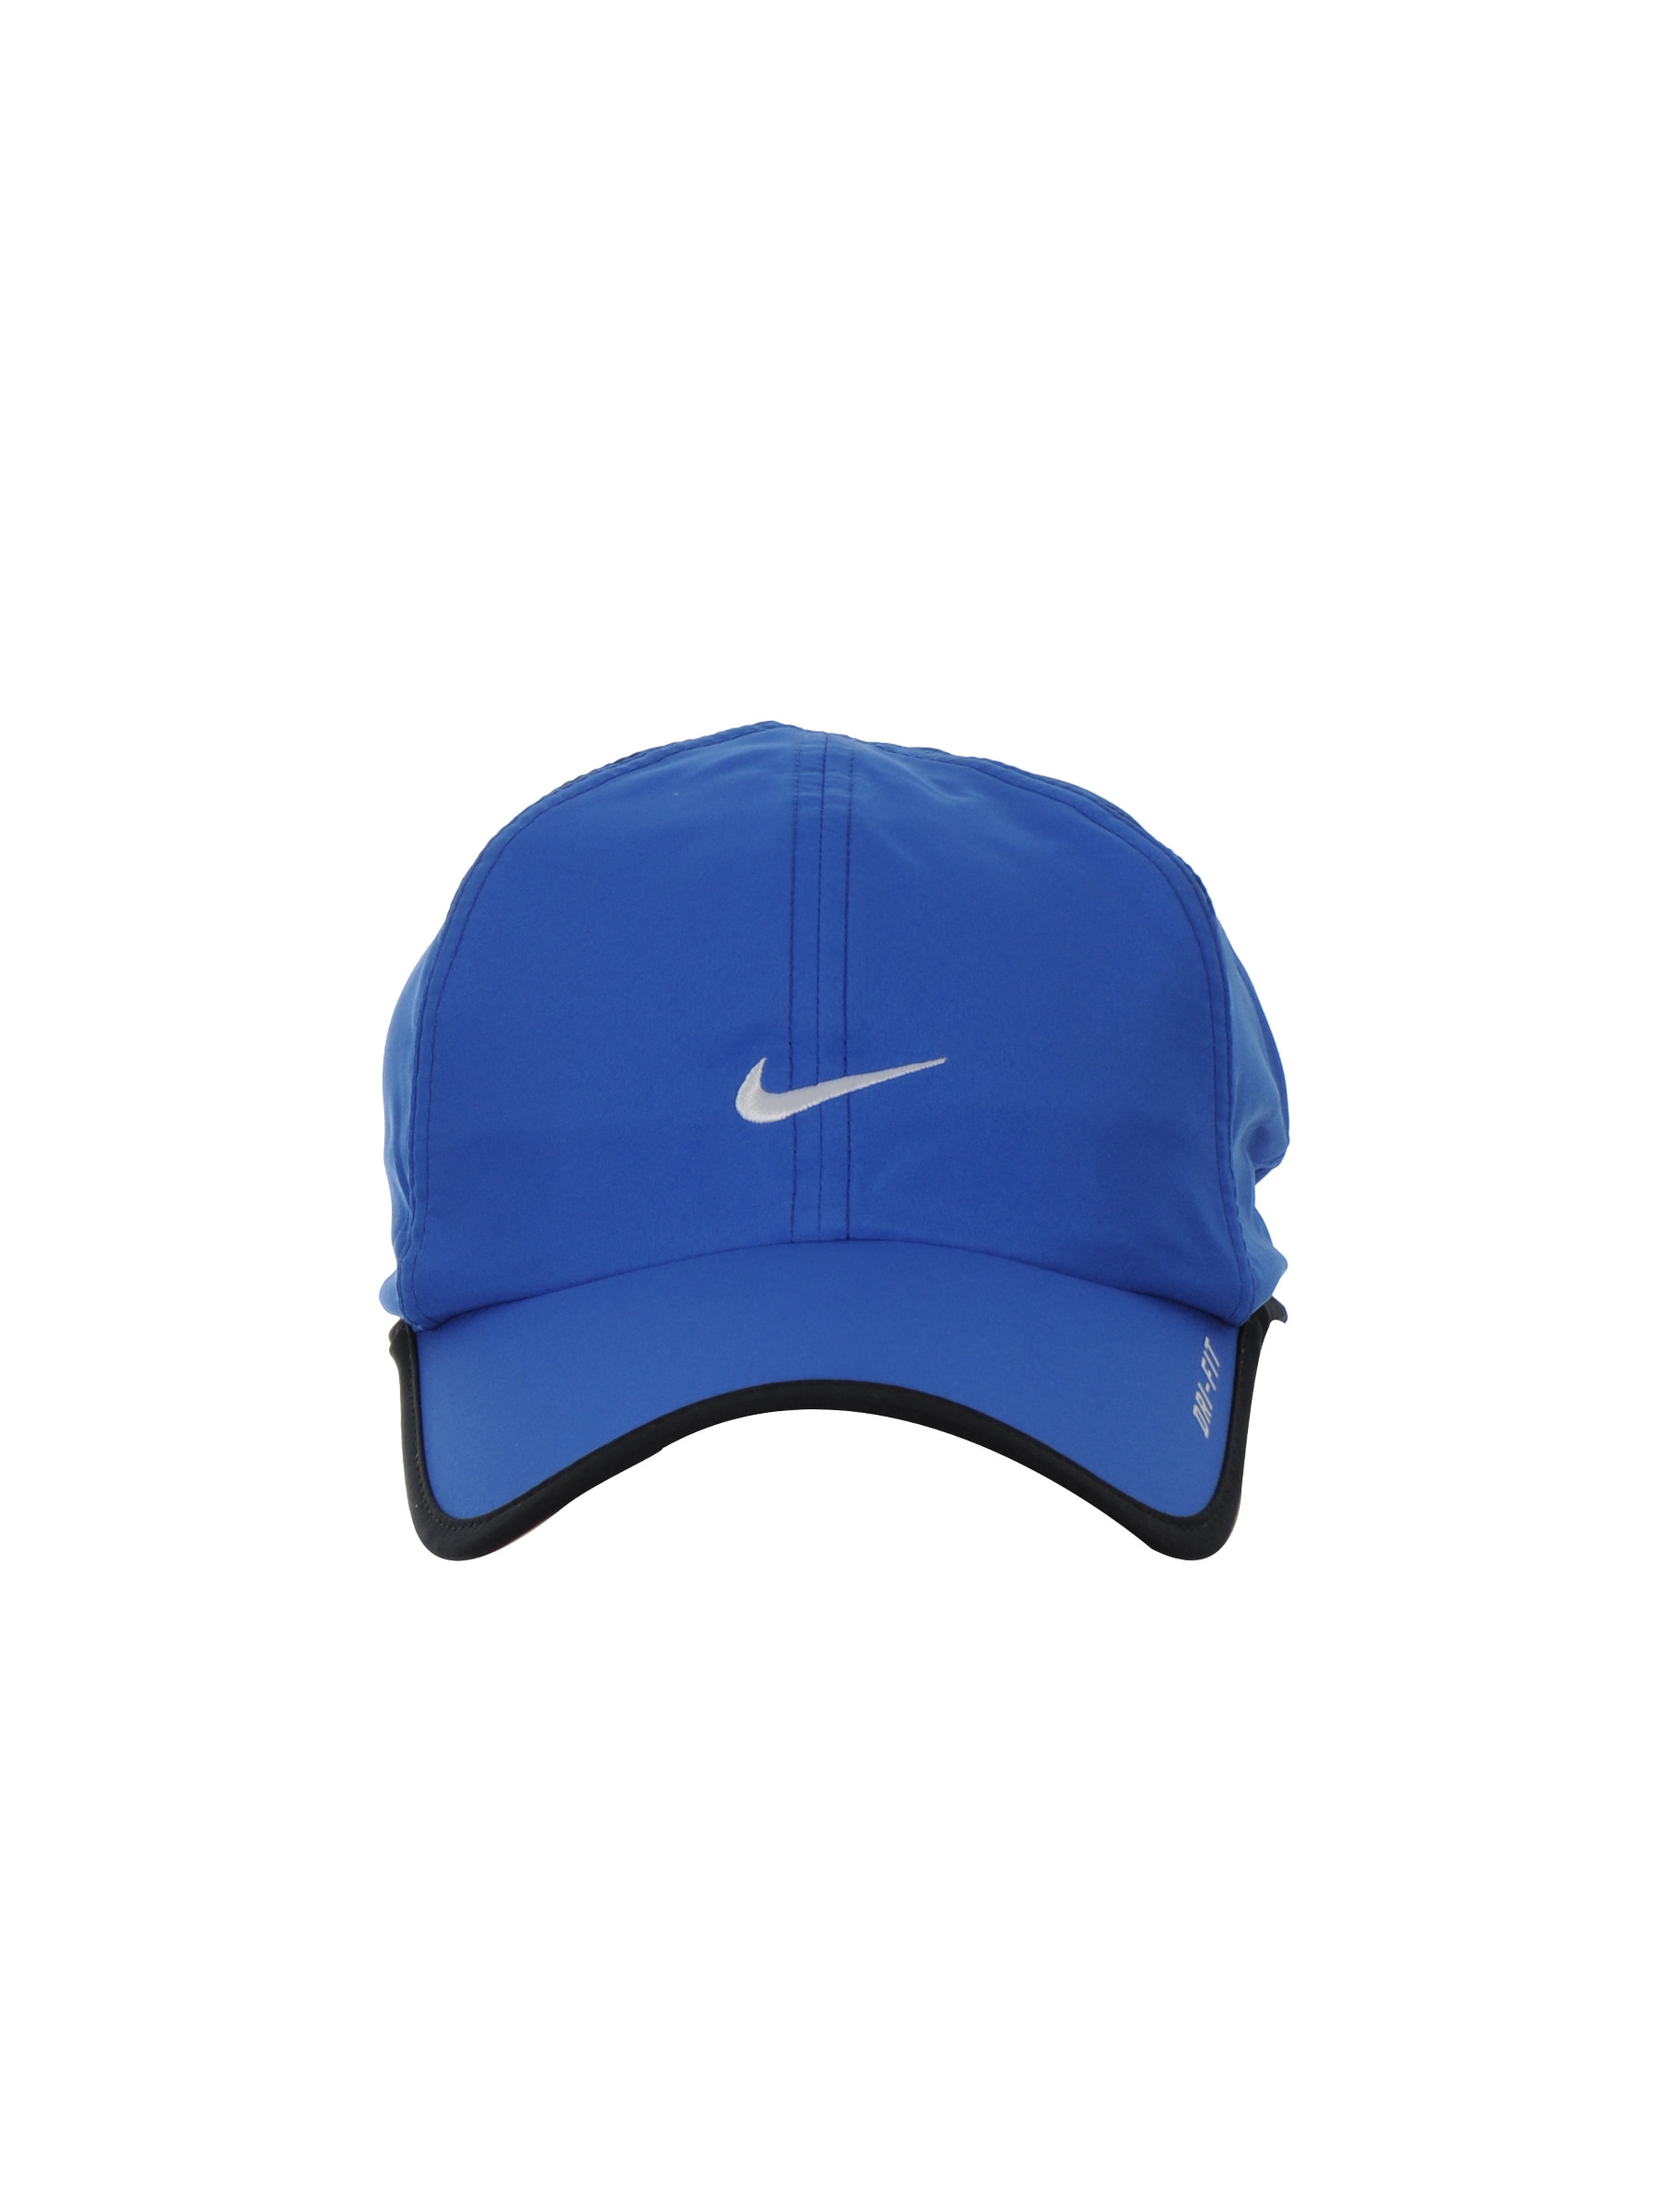 Nike Unisex Feather lite Blue Caps